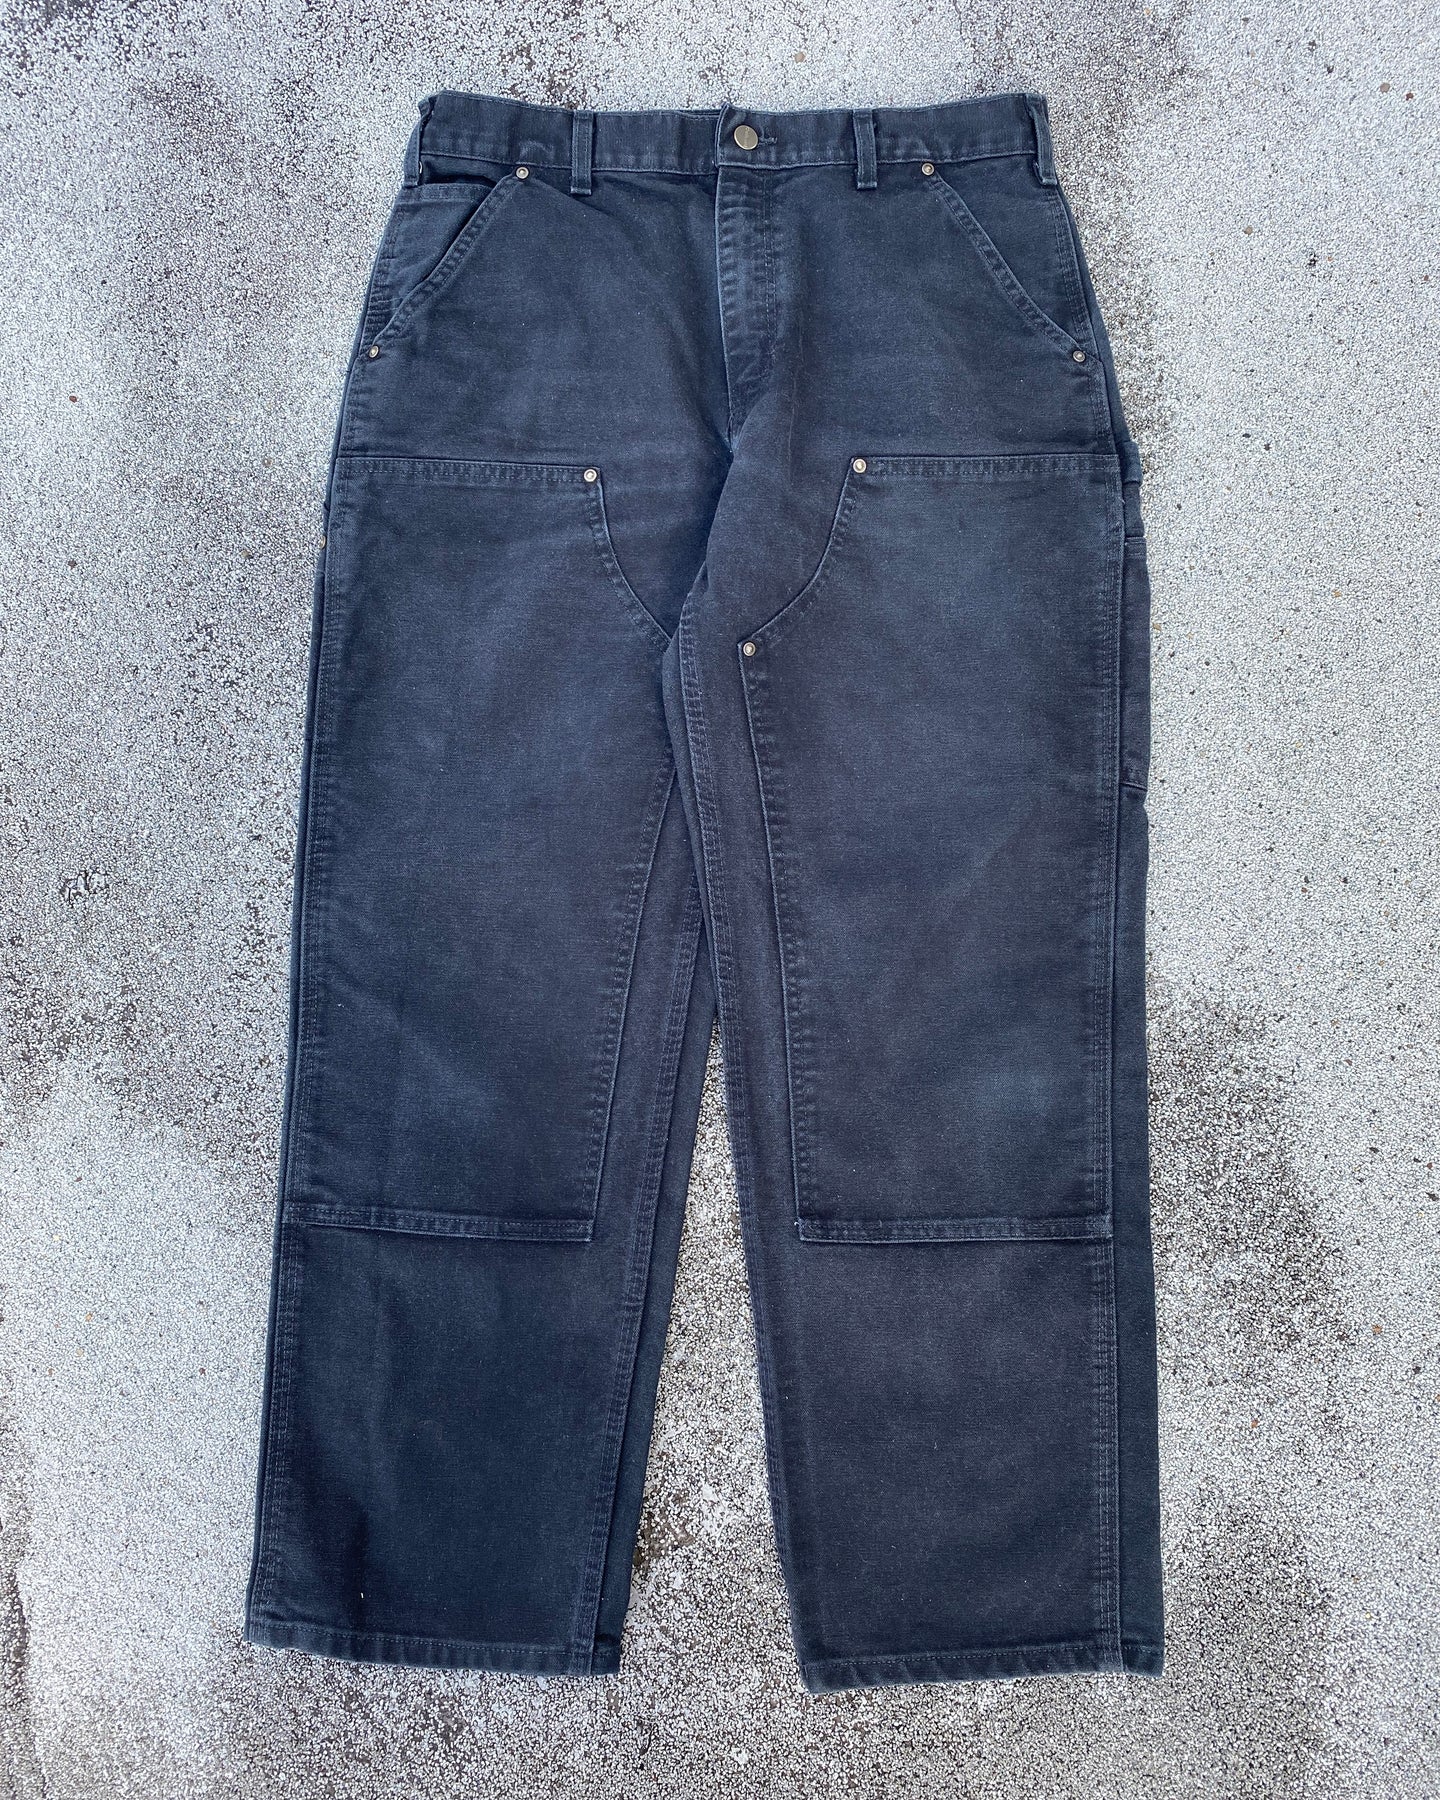 1990s Carhartt Black Double Knee Pants - Size 33 x 30